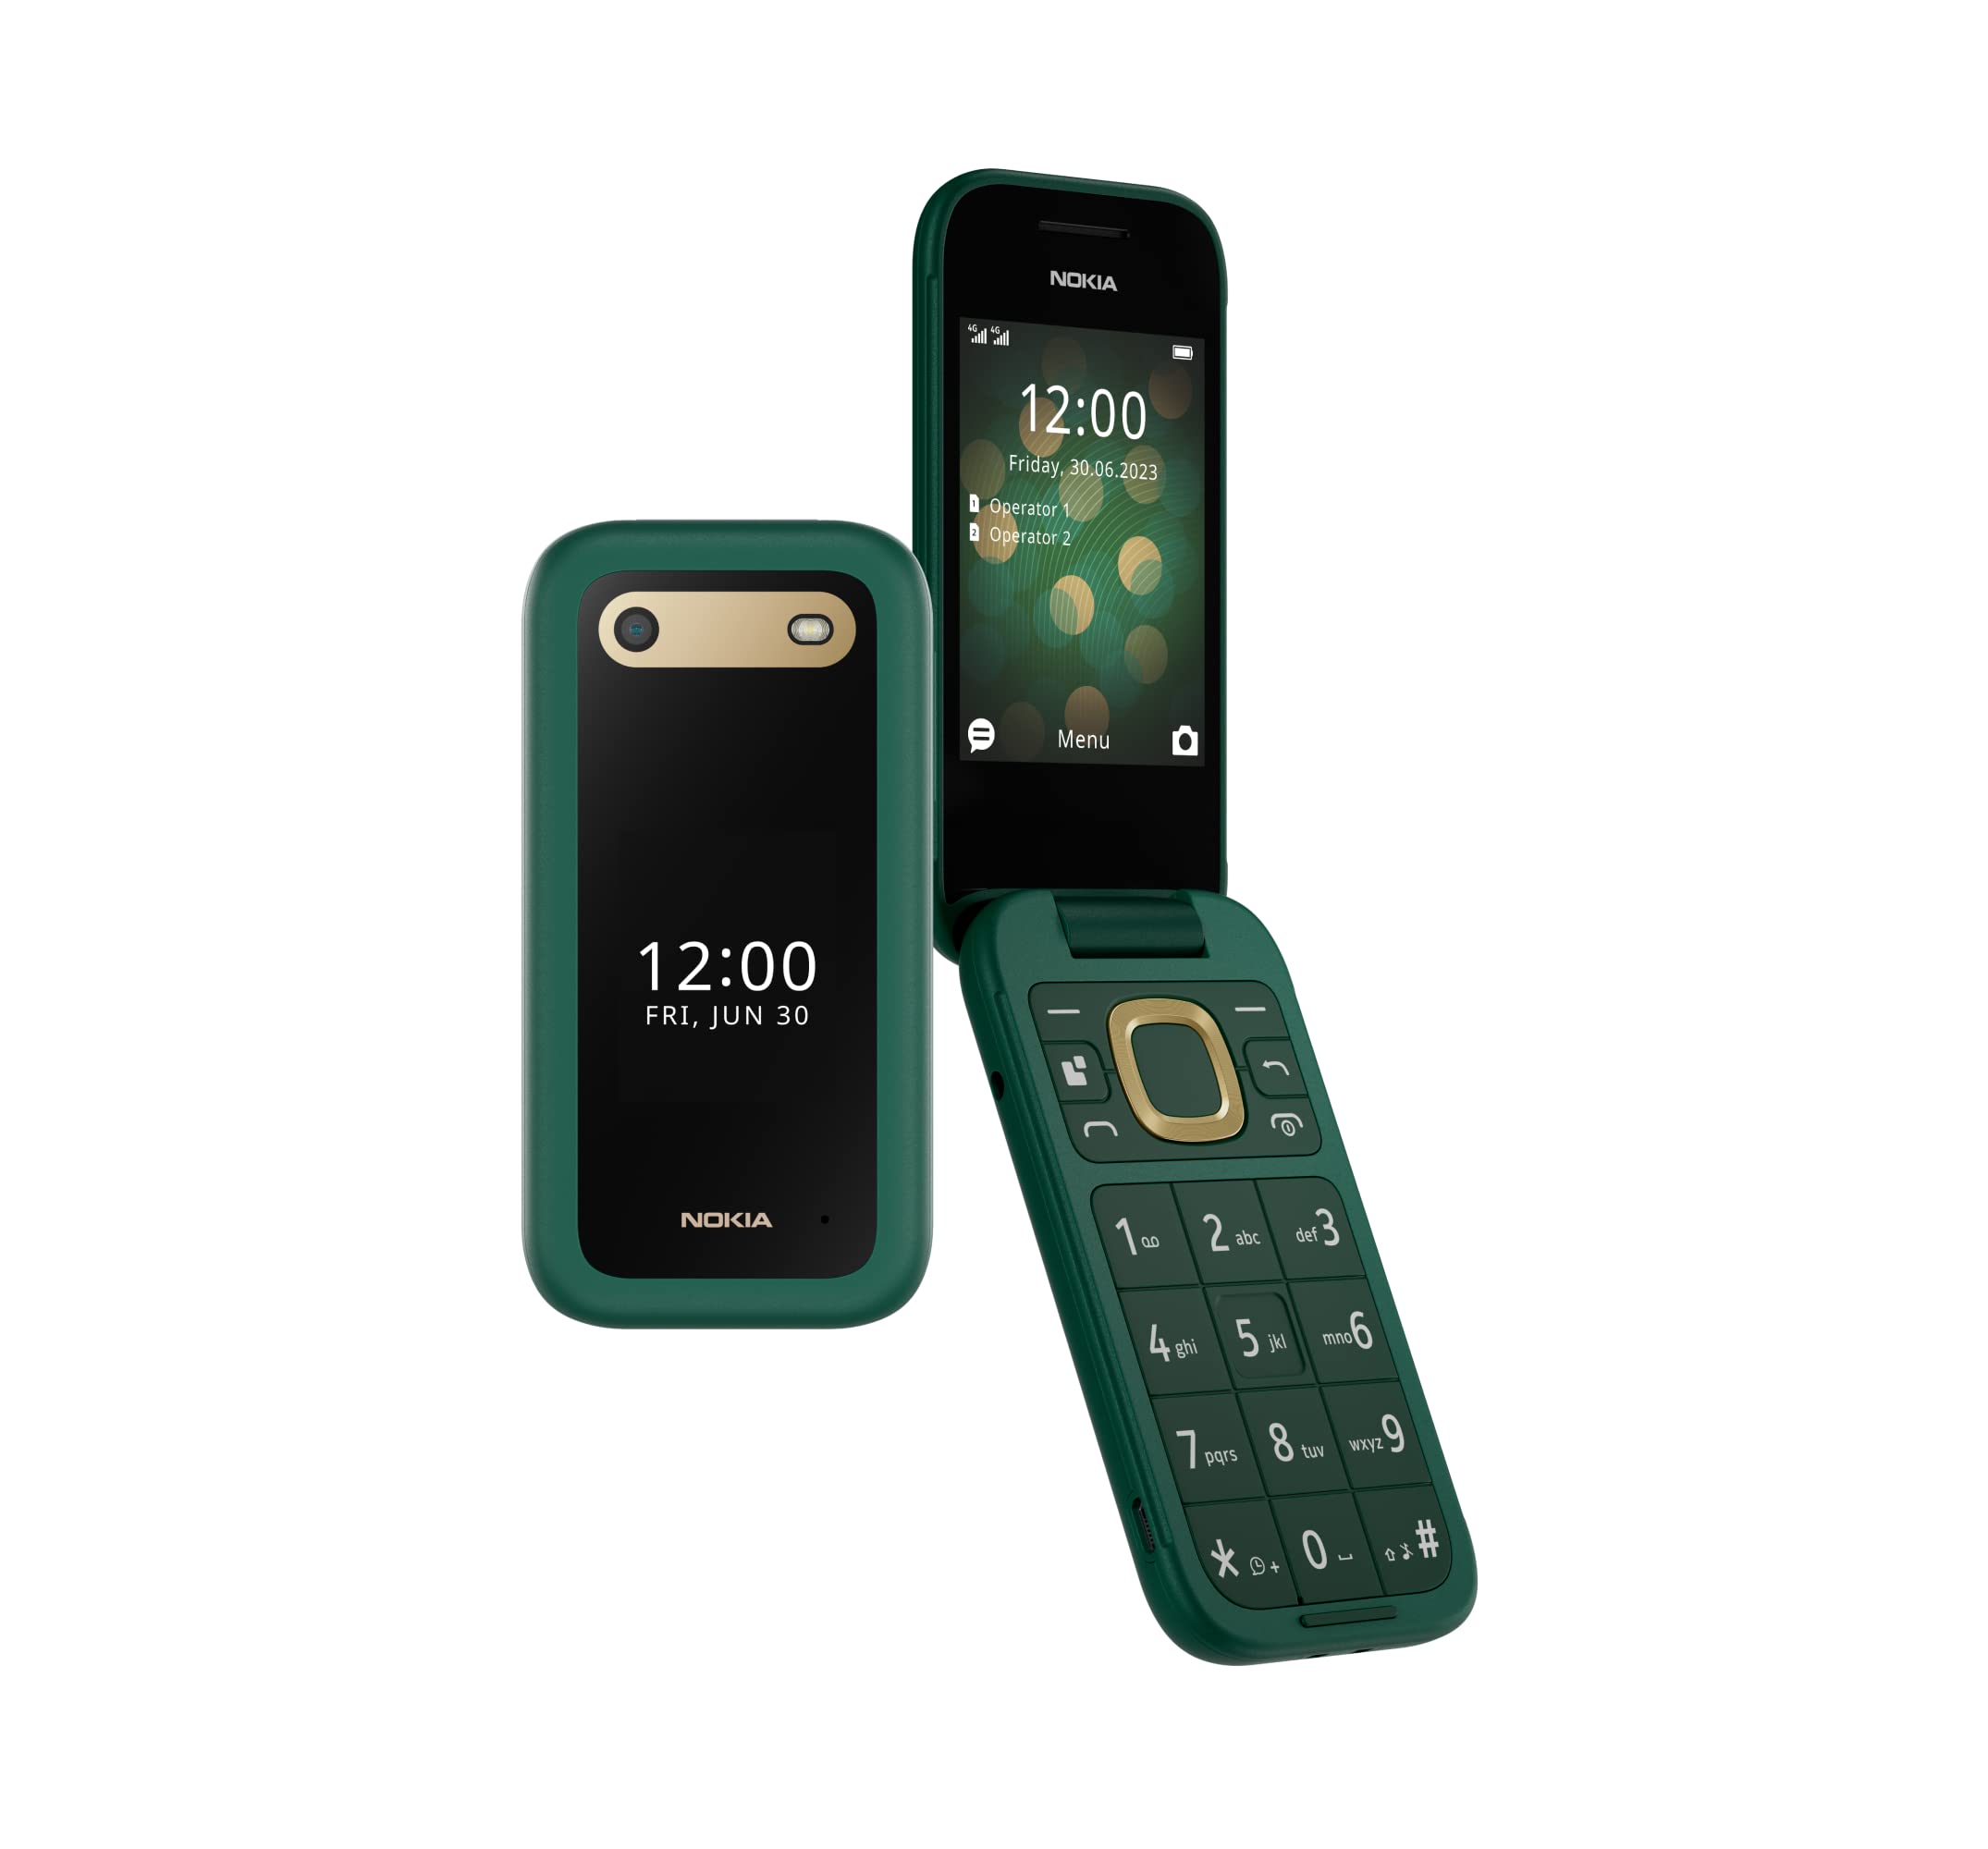 Nokia 2660 Flip Dual-SIM 128MB ROM + 48MB RAM (GSM Only | No CDMA) Factory Unlocked Android 4G/LTE Smartphone (Lush Green) - International Version